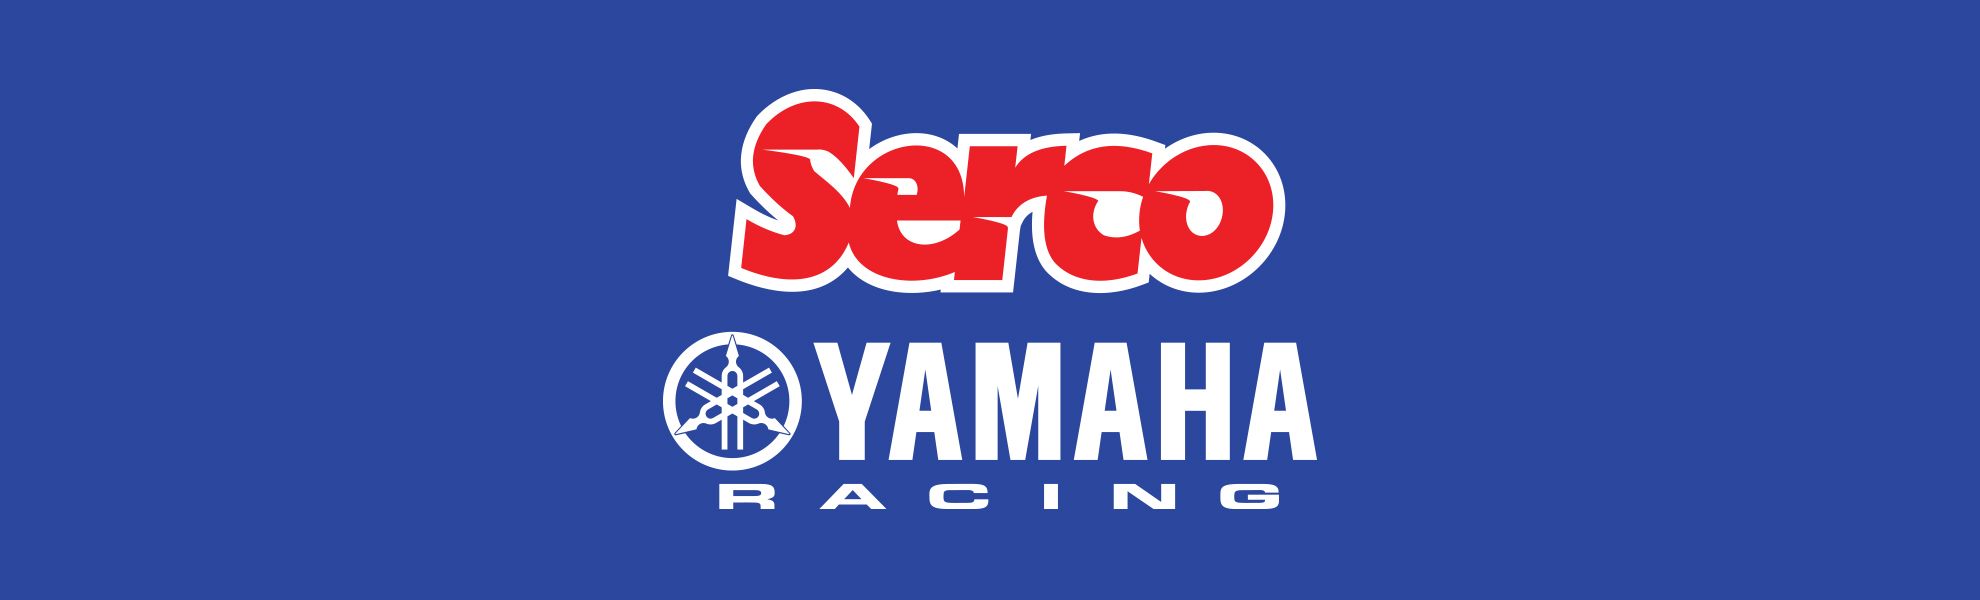 Serco Yamaha Raceteam